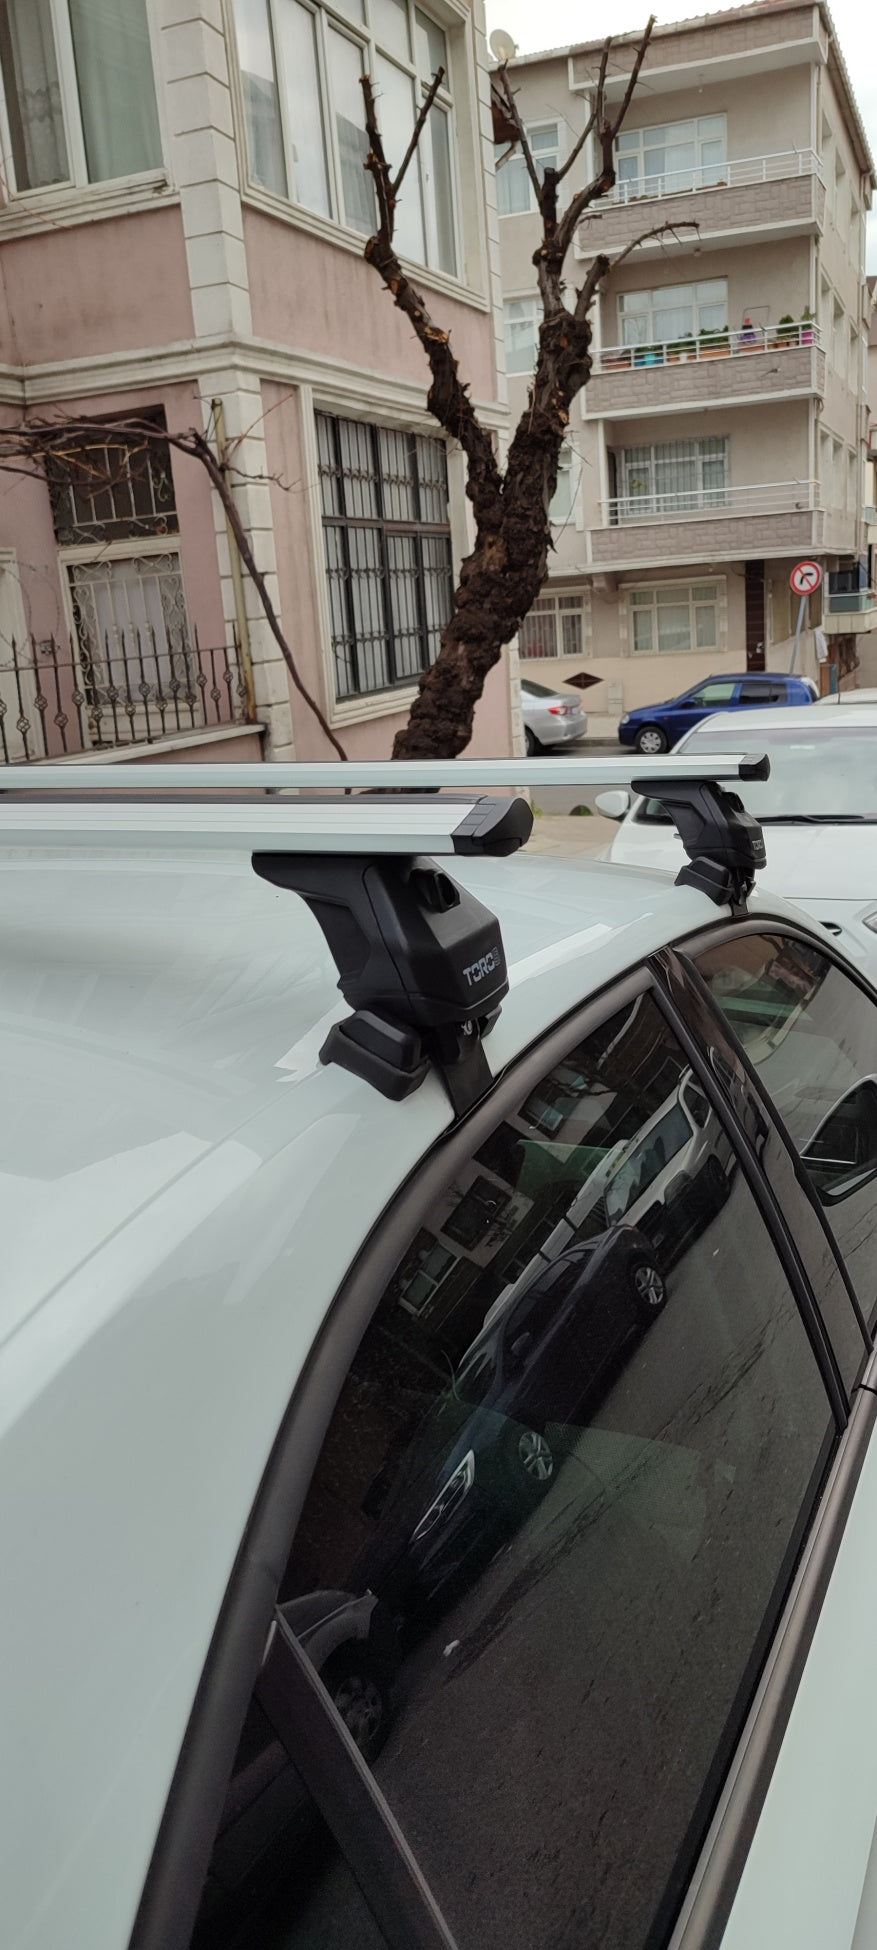 For Nissan Juke 2017-Up Roof Rack Cross Bars Metal Bracket Normal Roof Alu Black